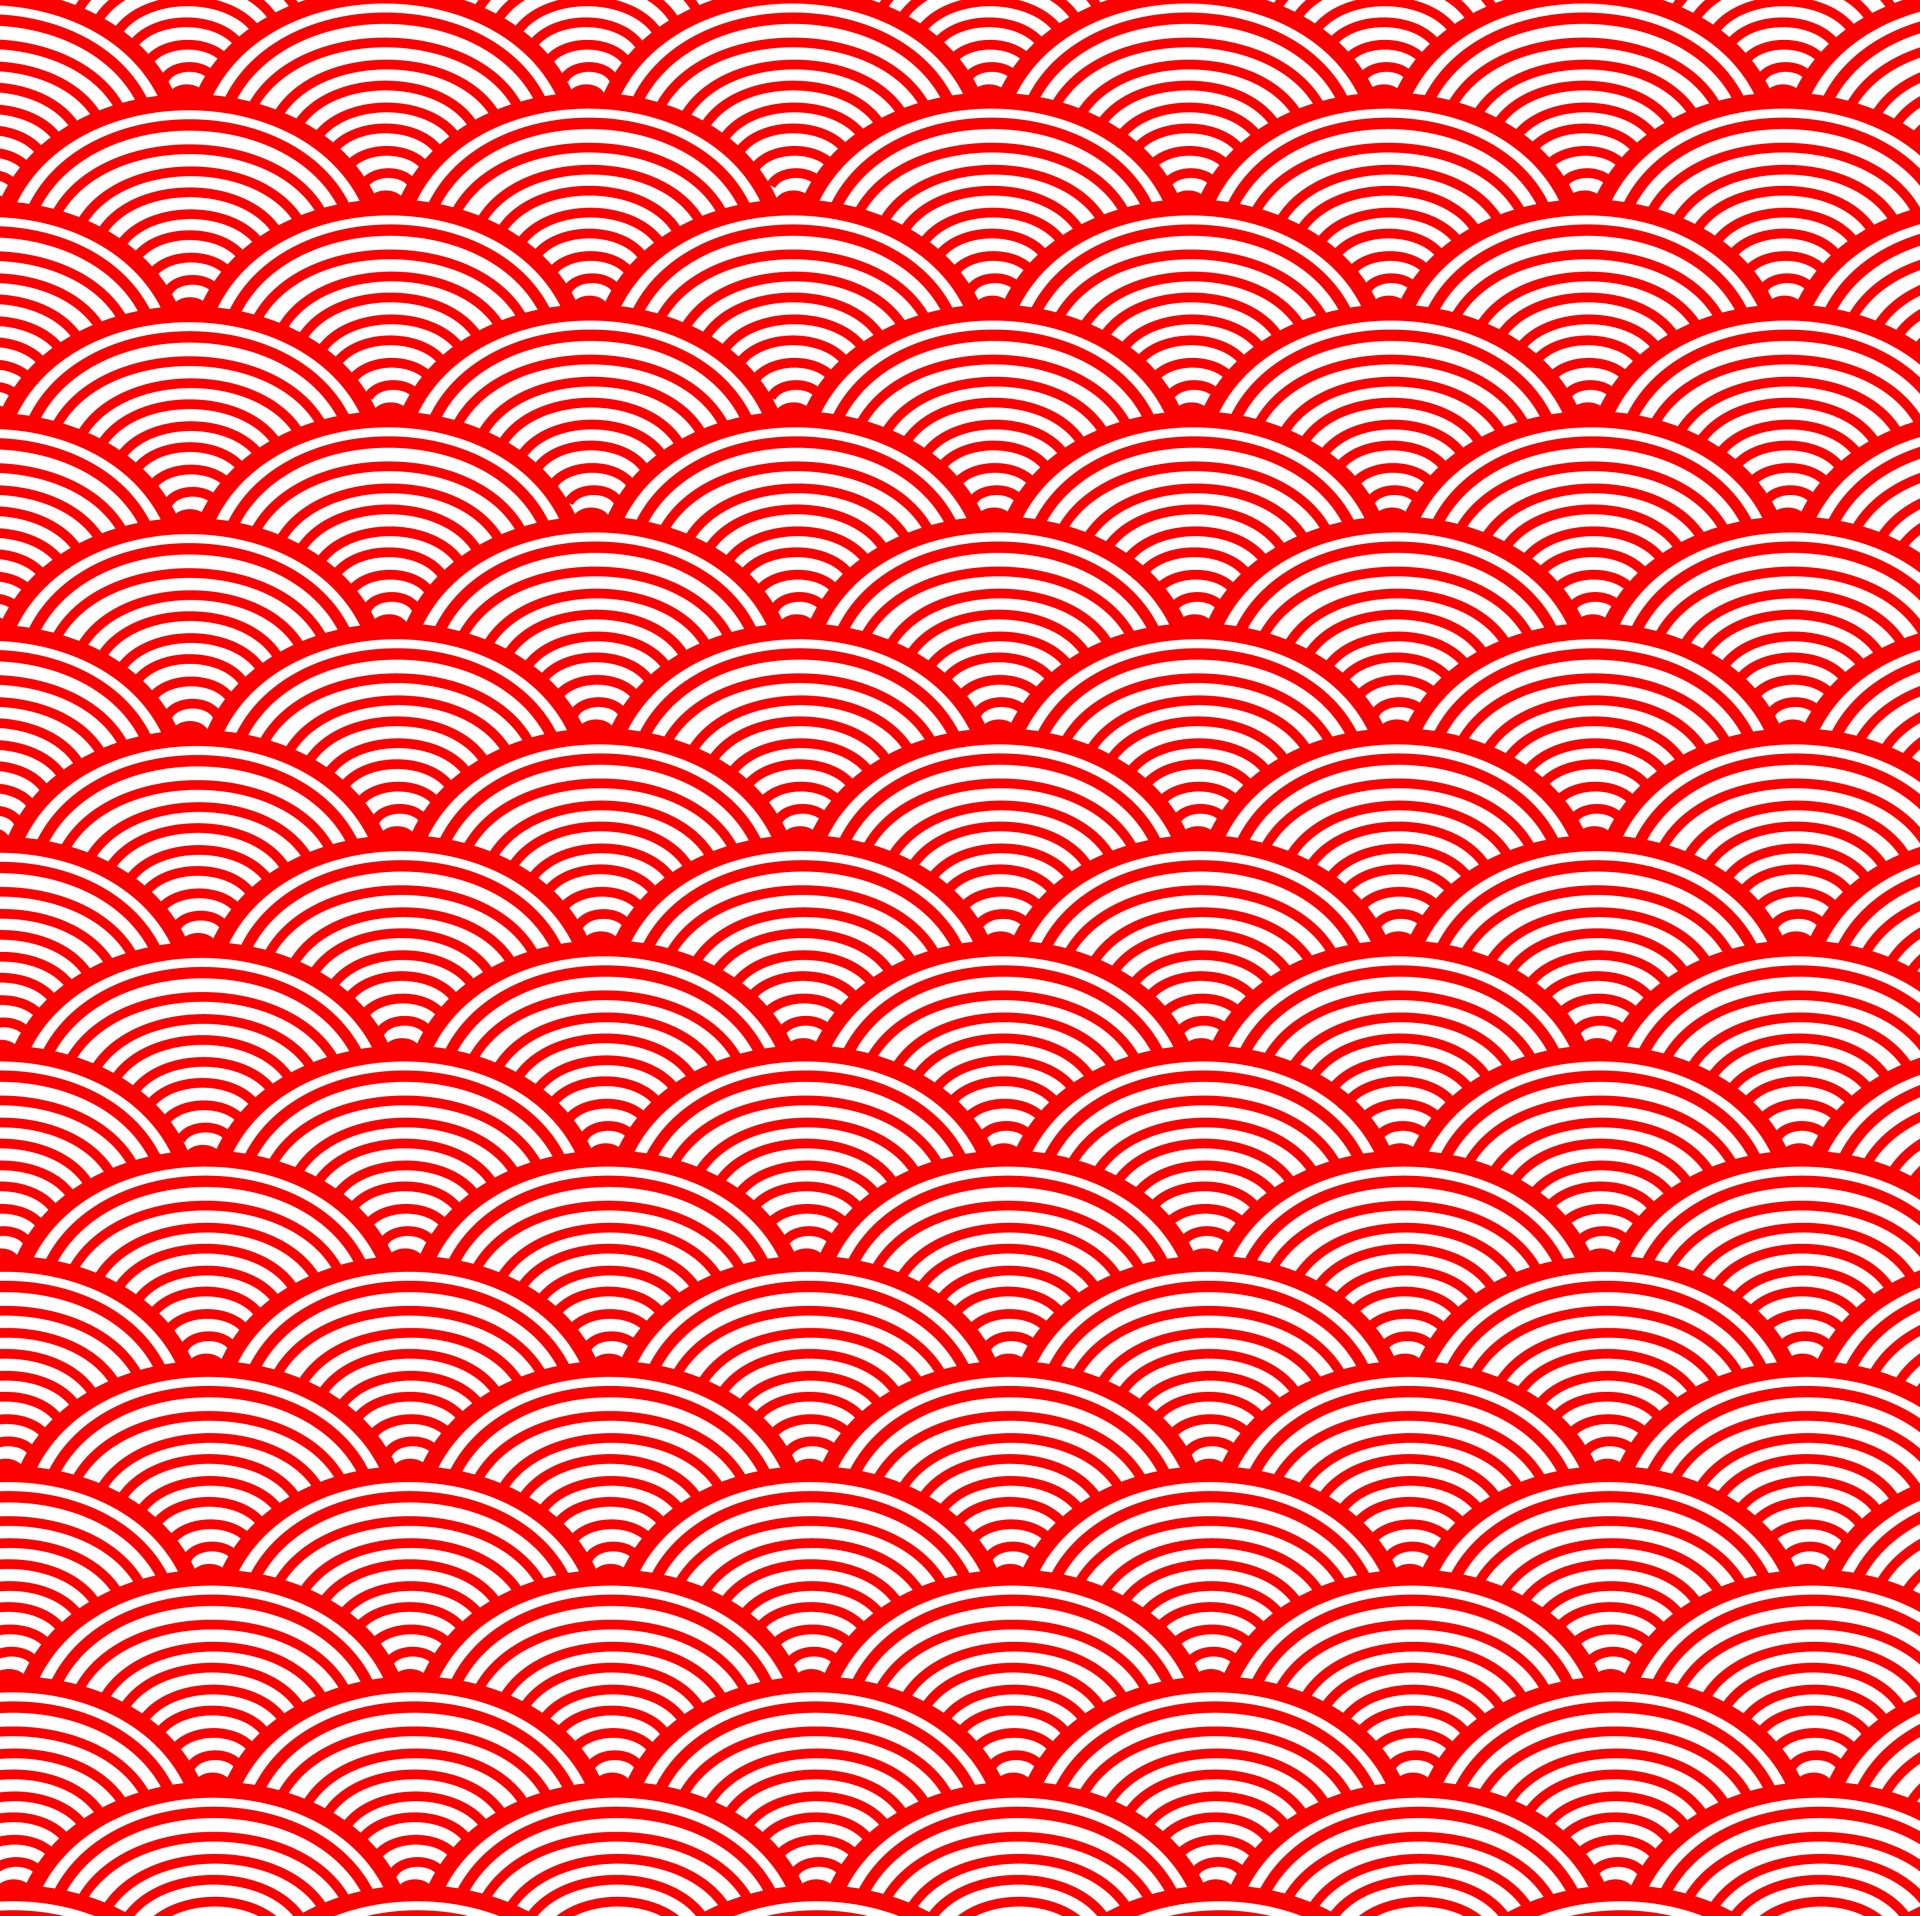 Japanese Wave Wallpaper Background Free Stock Photo Public